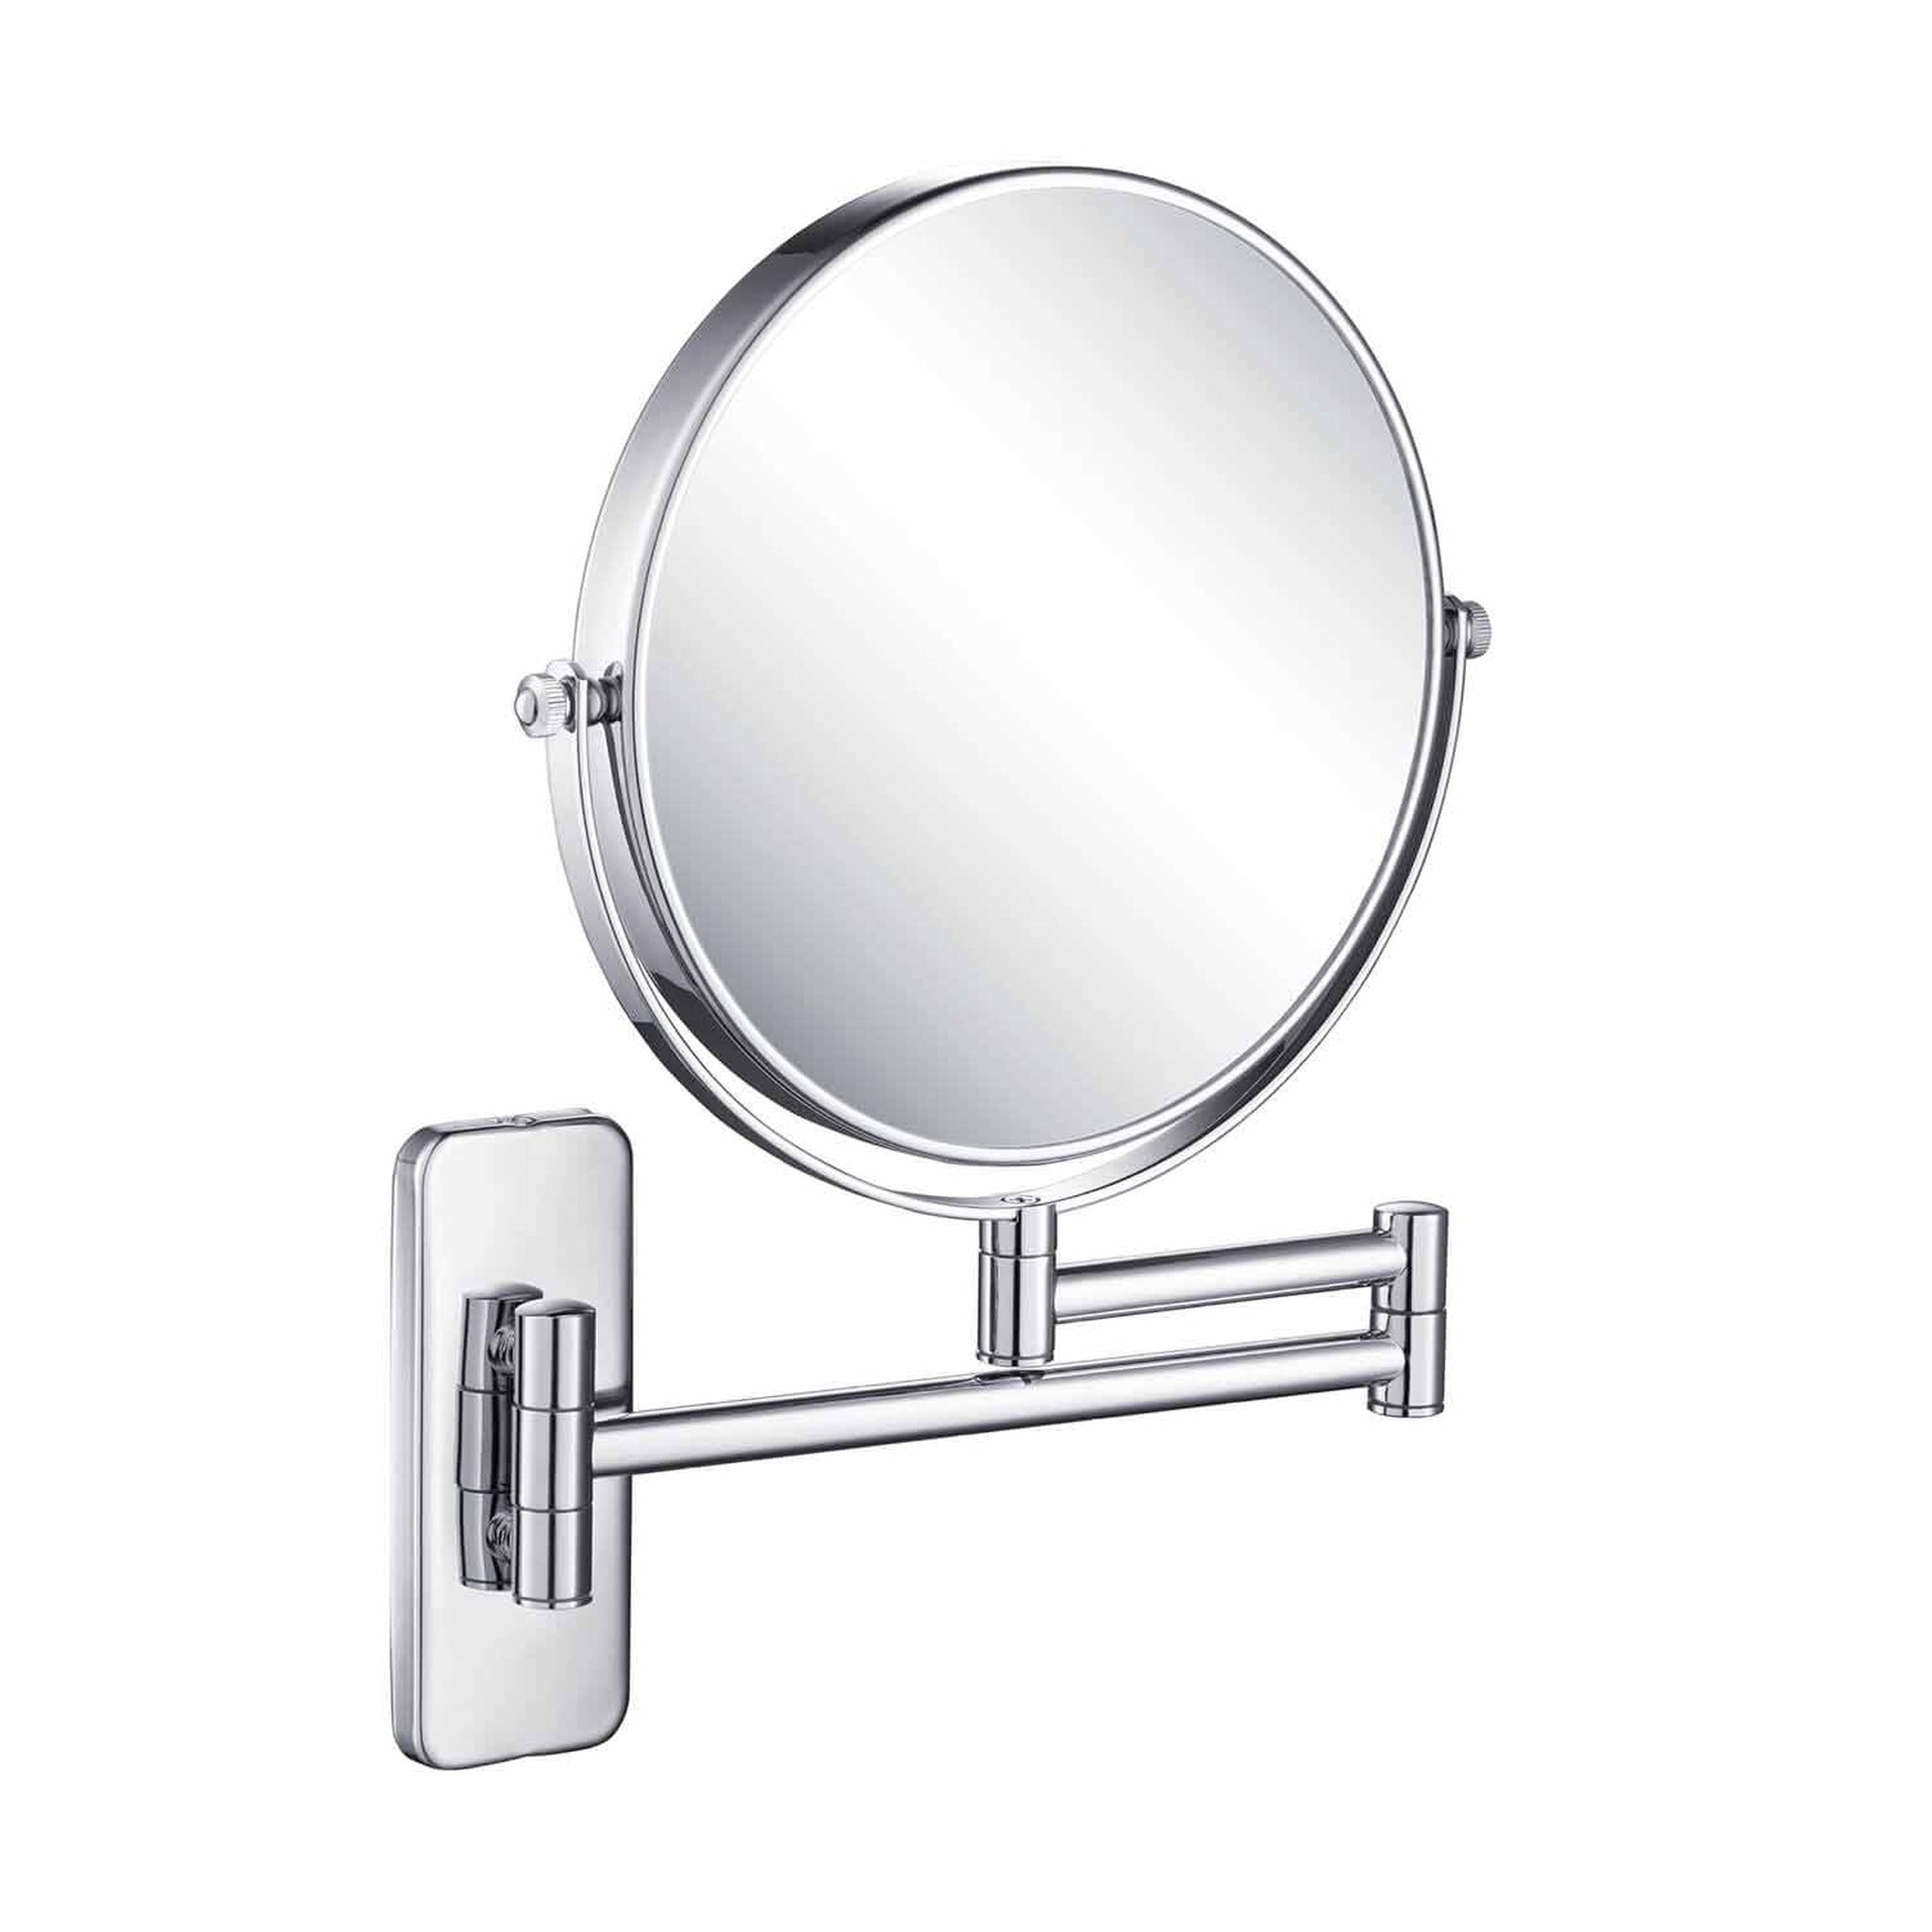 https://cdn.shopify.com/s/files/1/0555/9527/0317/products/Kibi-Circular-Brass-Bathroom-Magnifying-Makeup-Shaving-Mirror-in-Chrome-Frame-Finish.jpg?v=1676103558